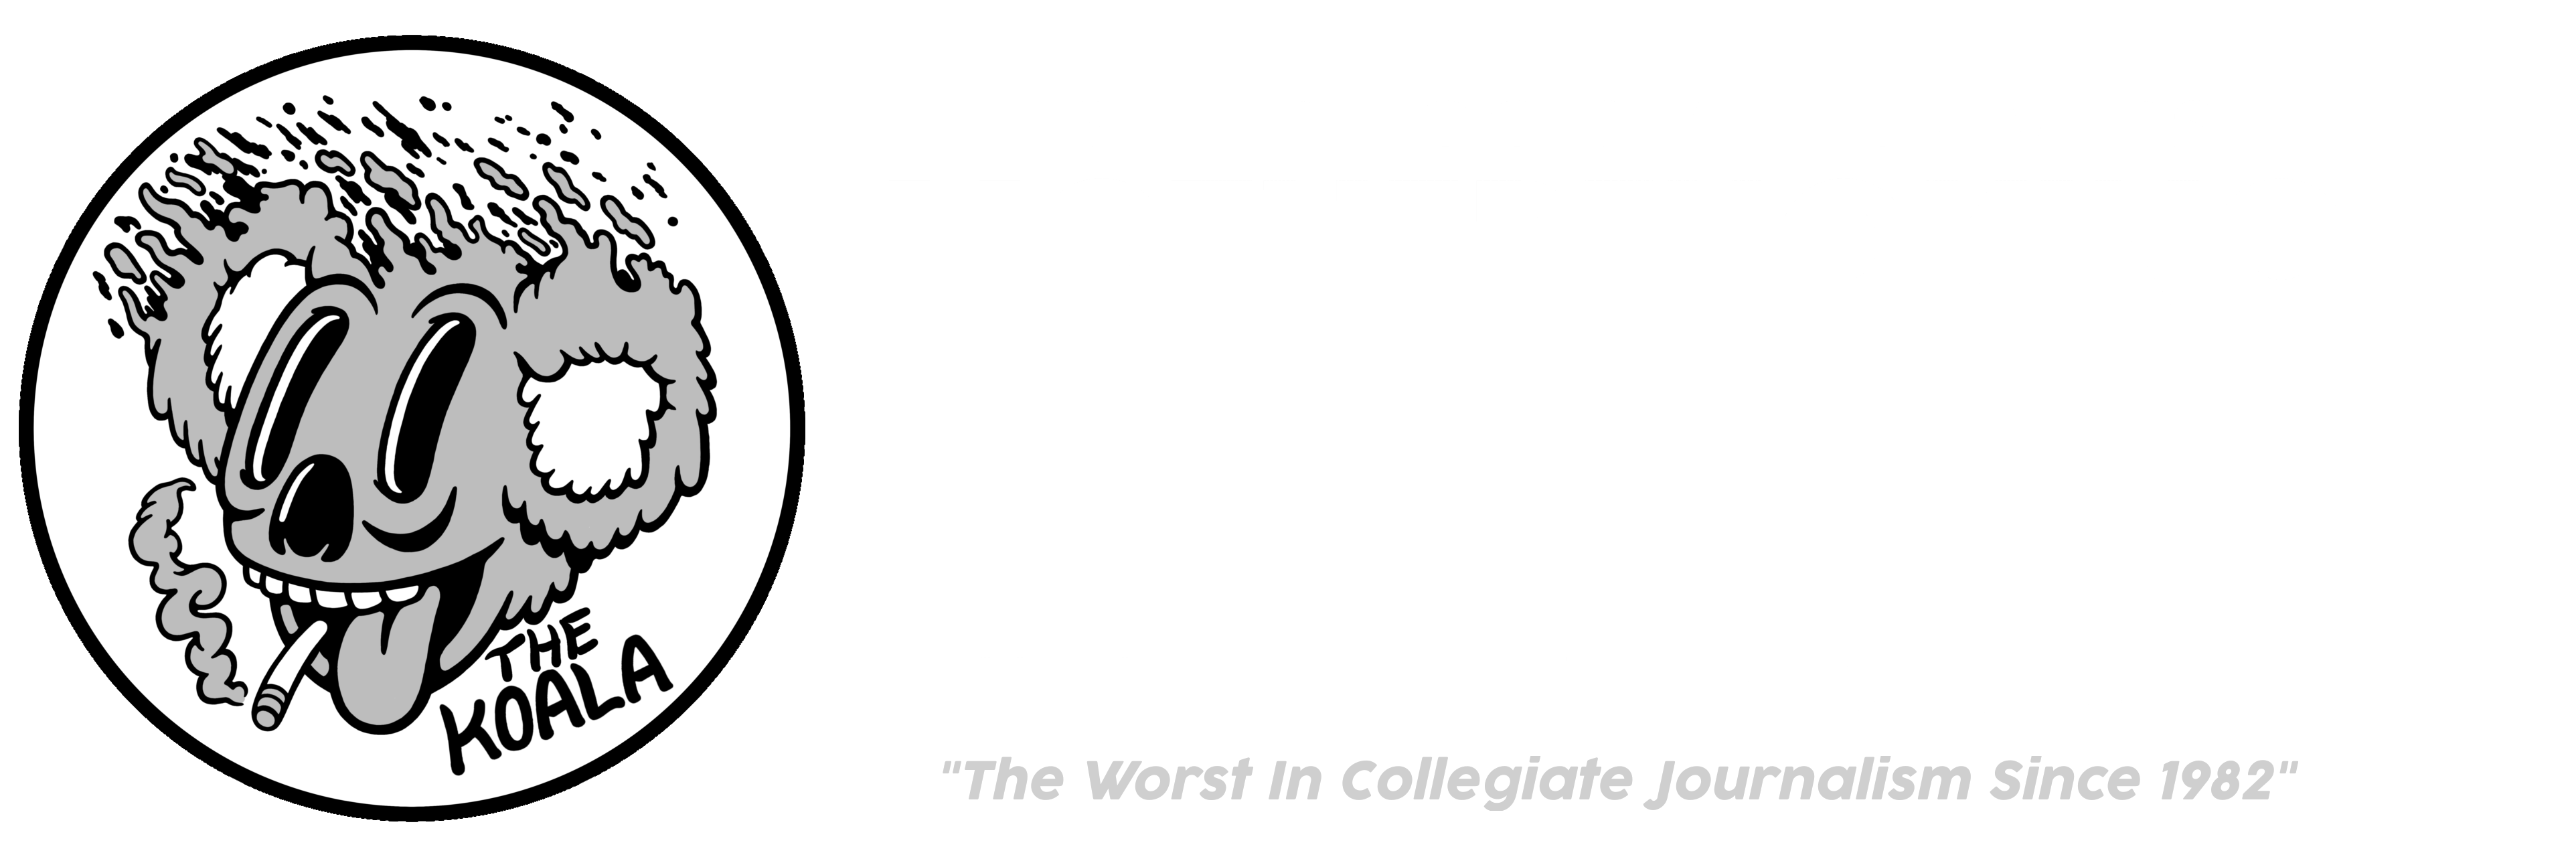 The San Diego State Koala Newspaper